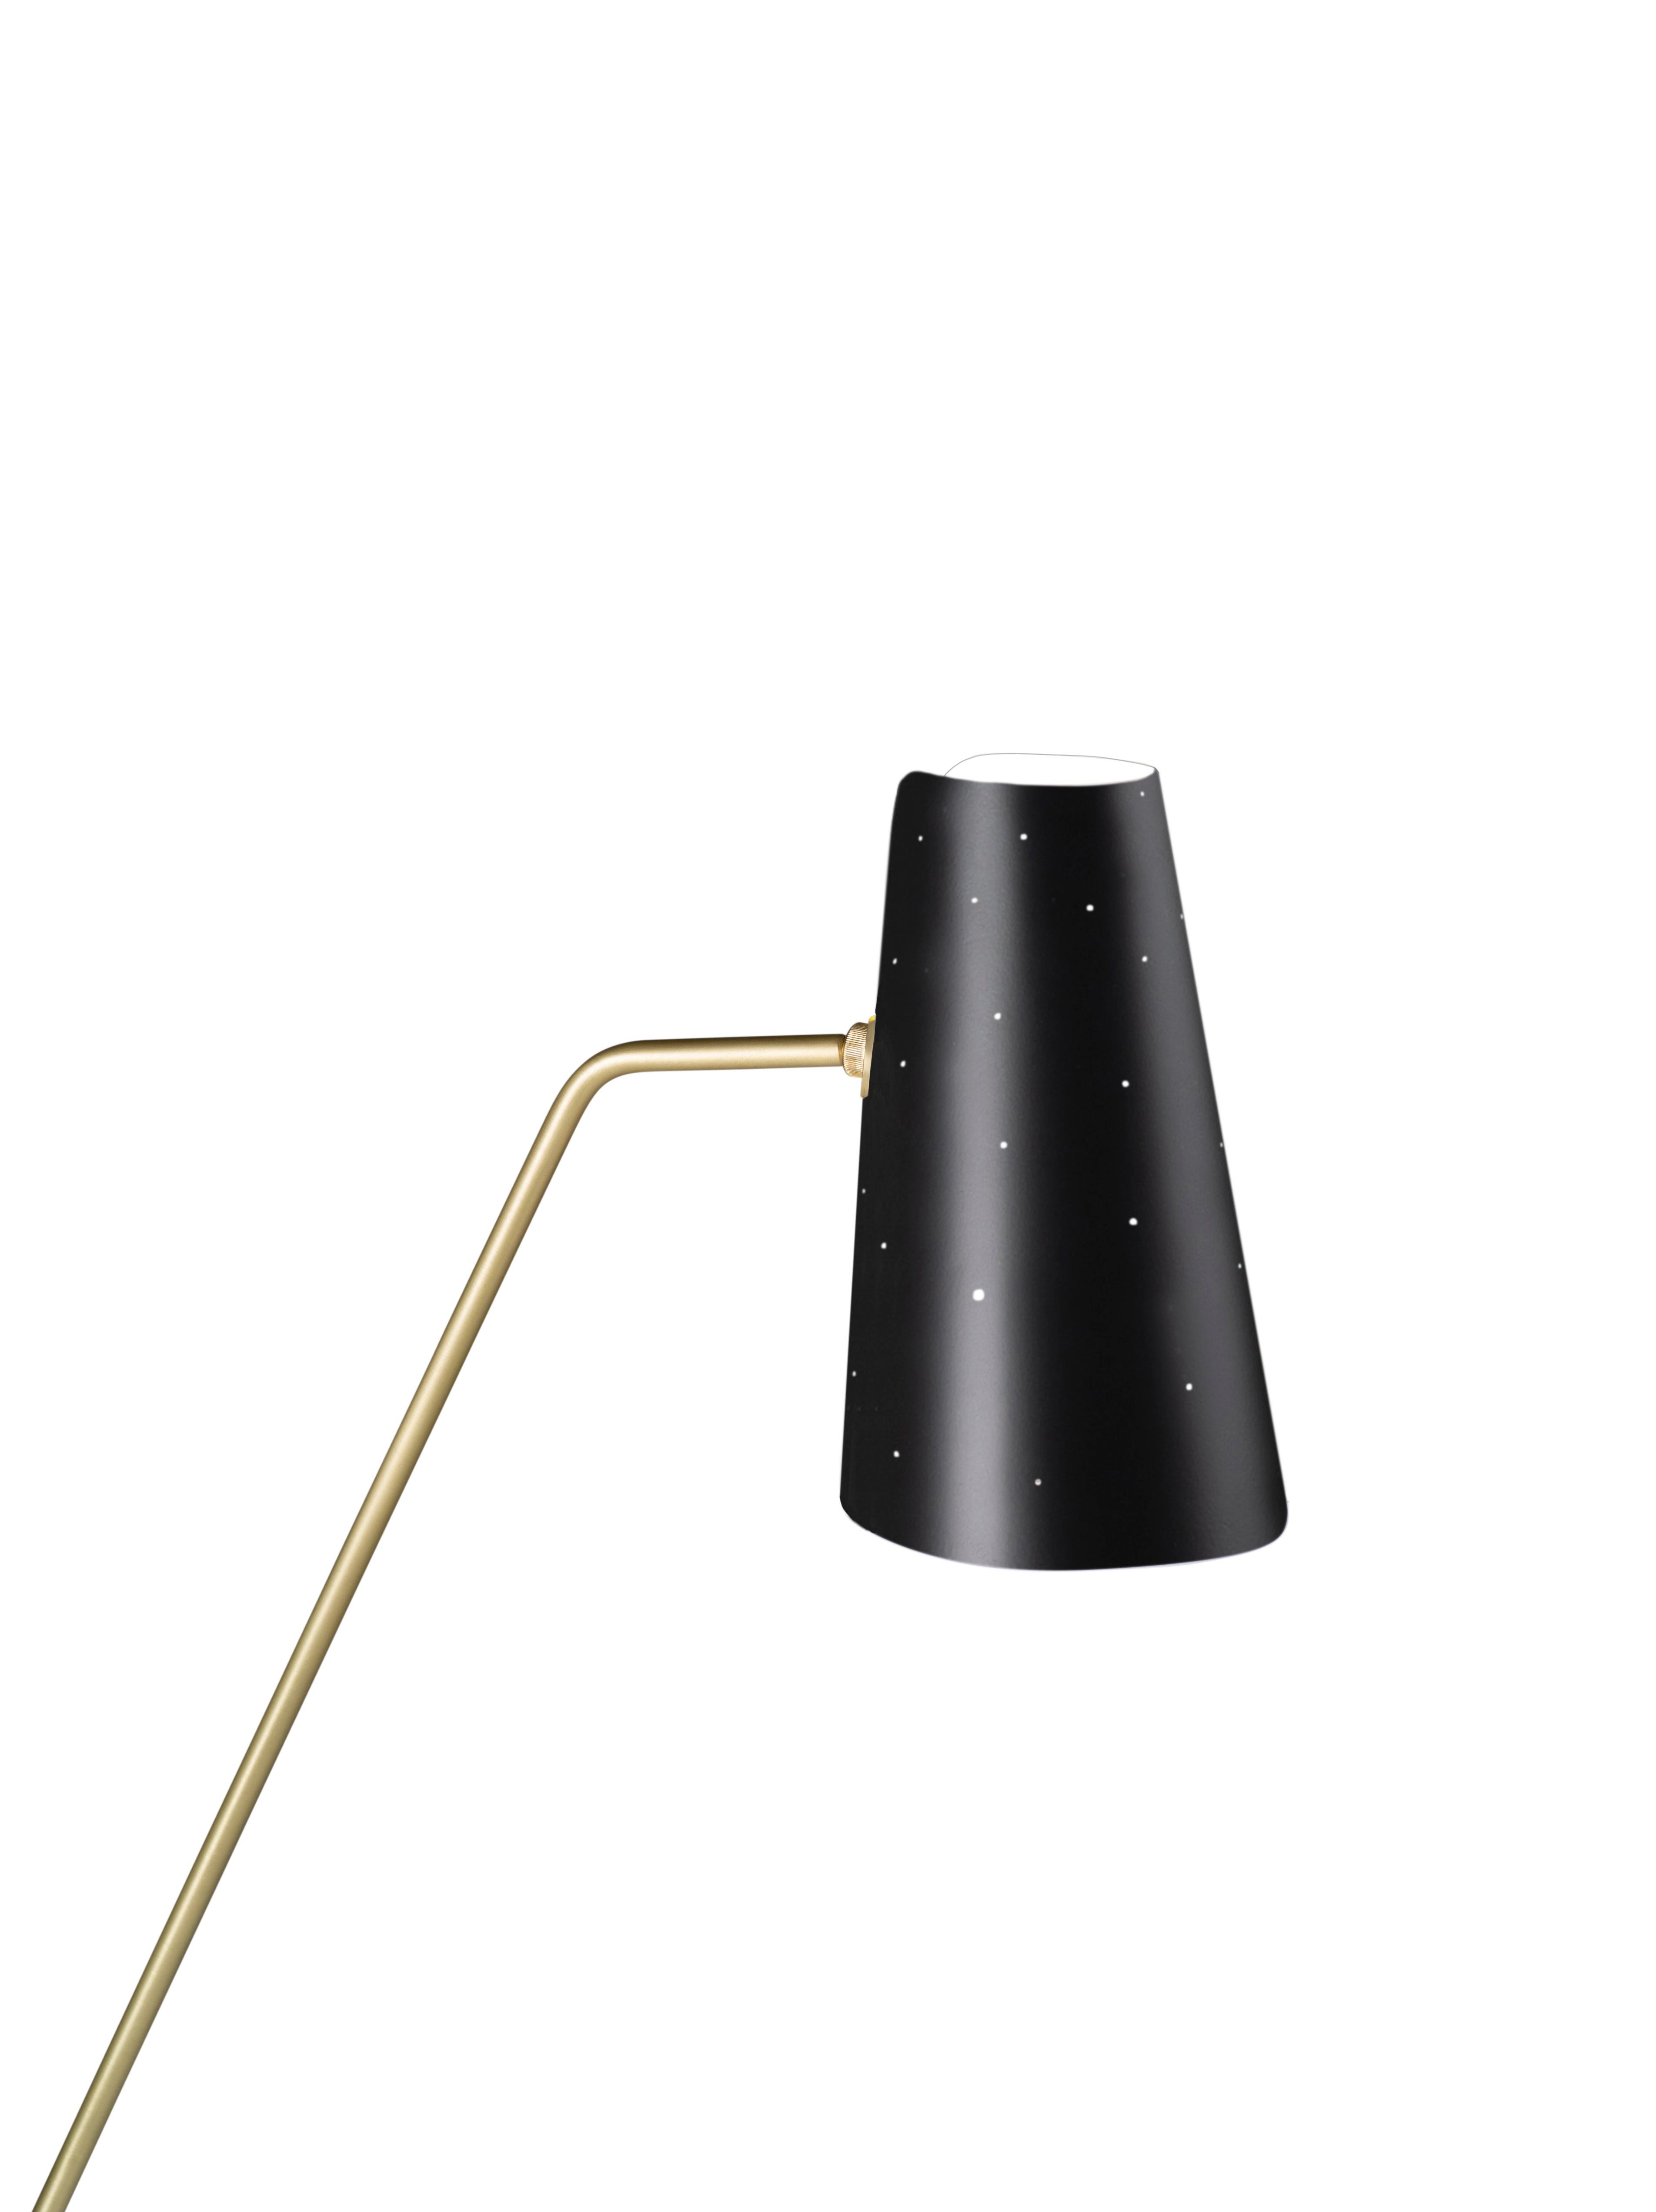 Brass Pierre Guariche 'G21' Adjustable Floor Lamp for Sammode Studio in Black For Sale